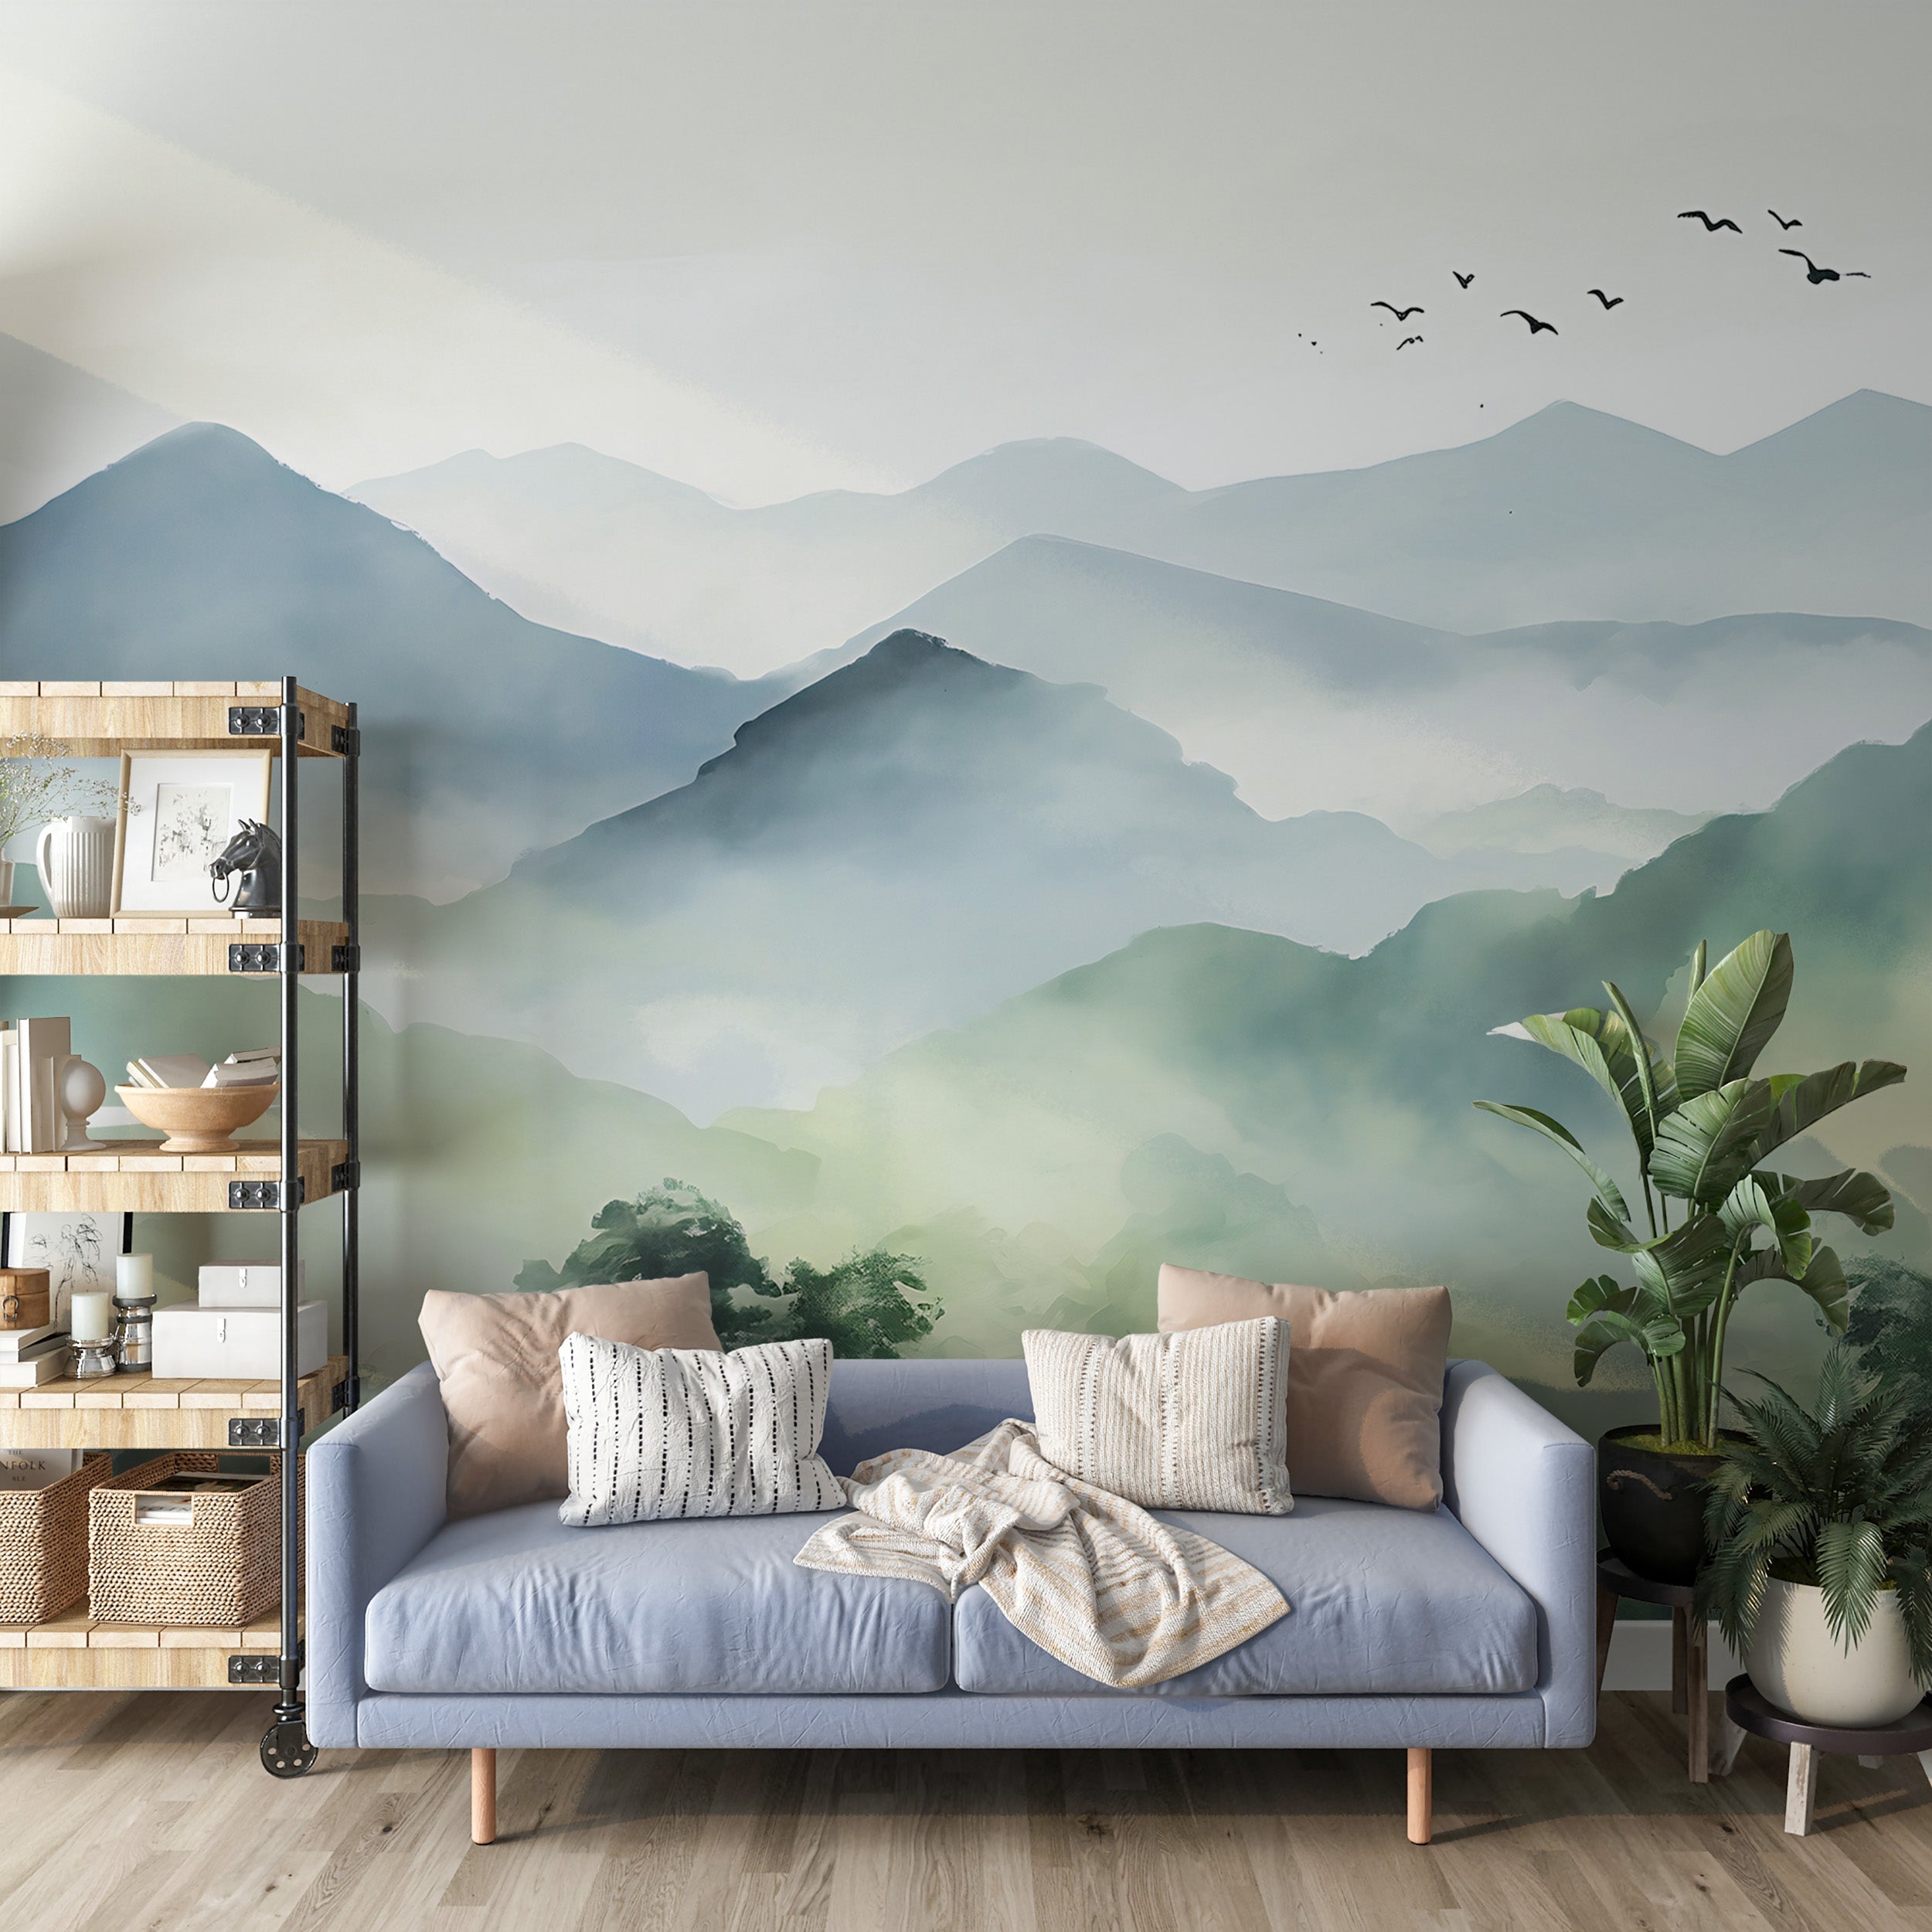 Create a Peaceful Oasis with Nursery Mountain Mural